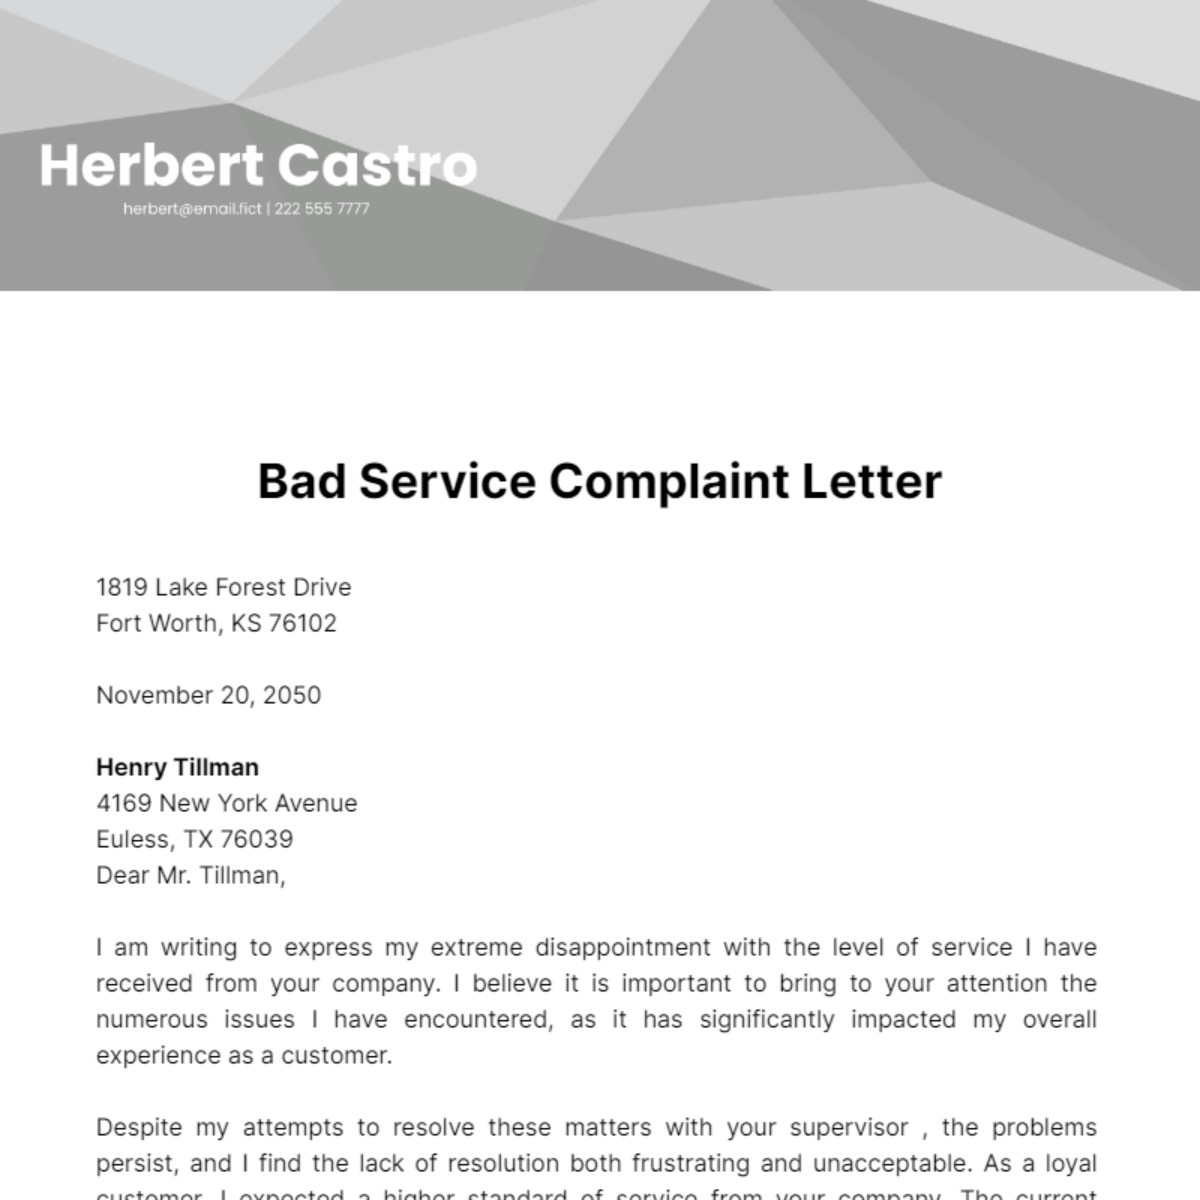 Bad Service Complaint Letter Template